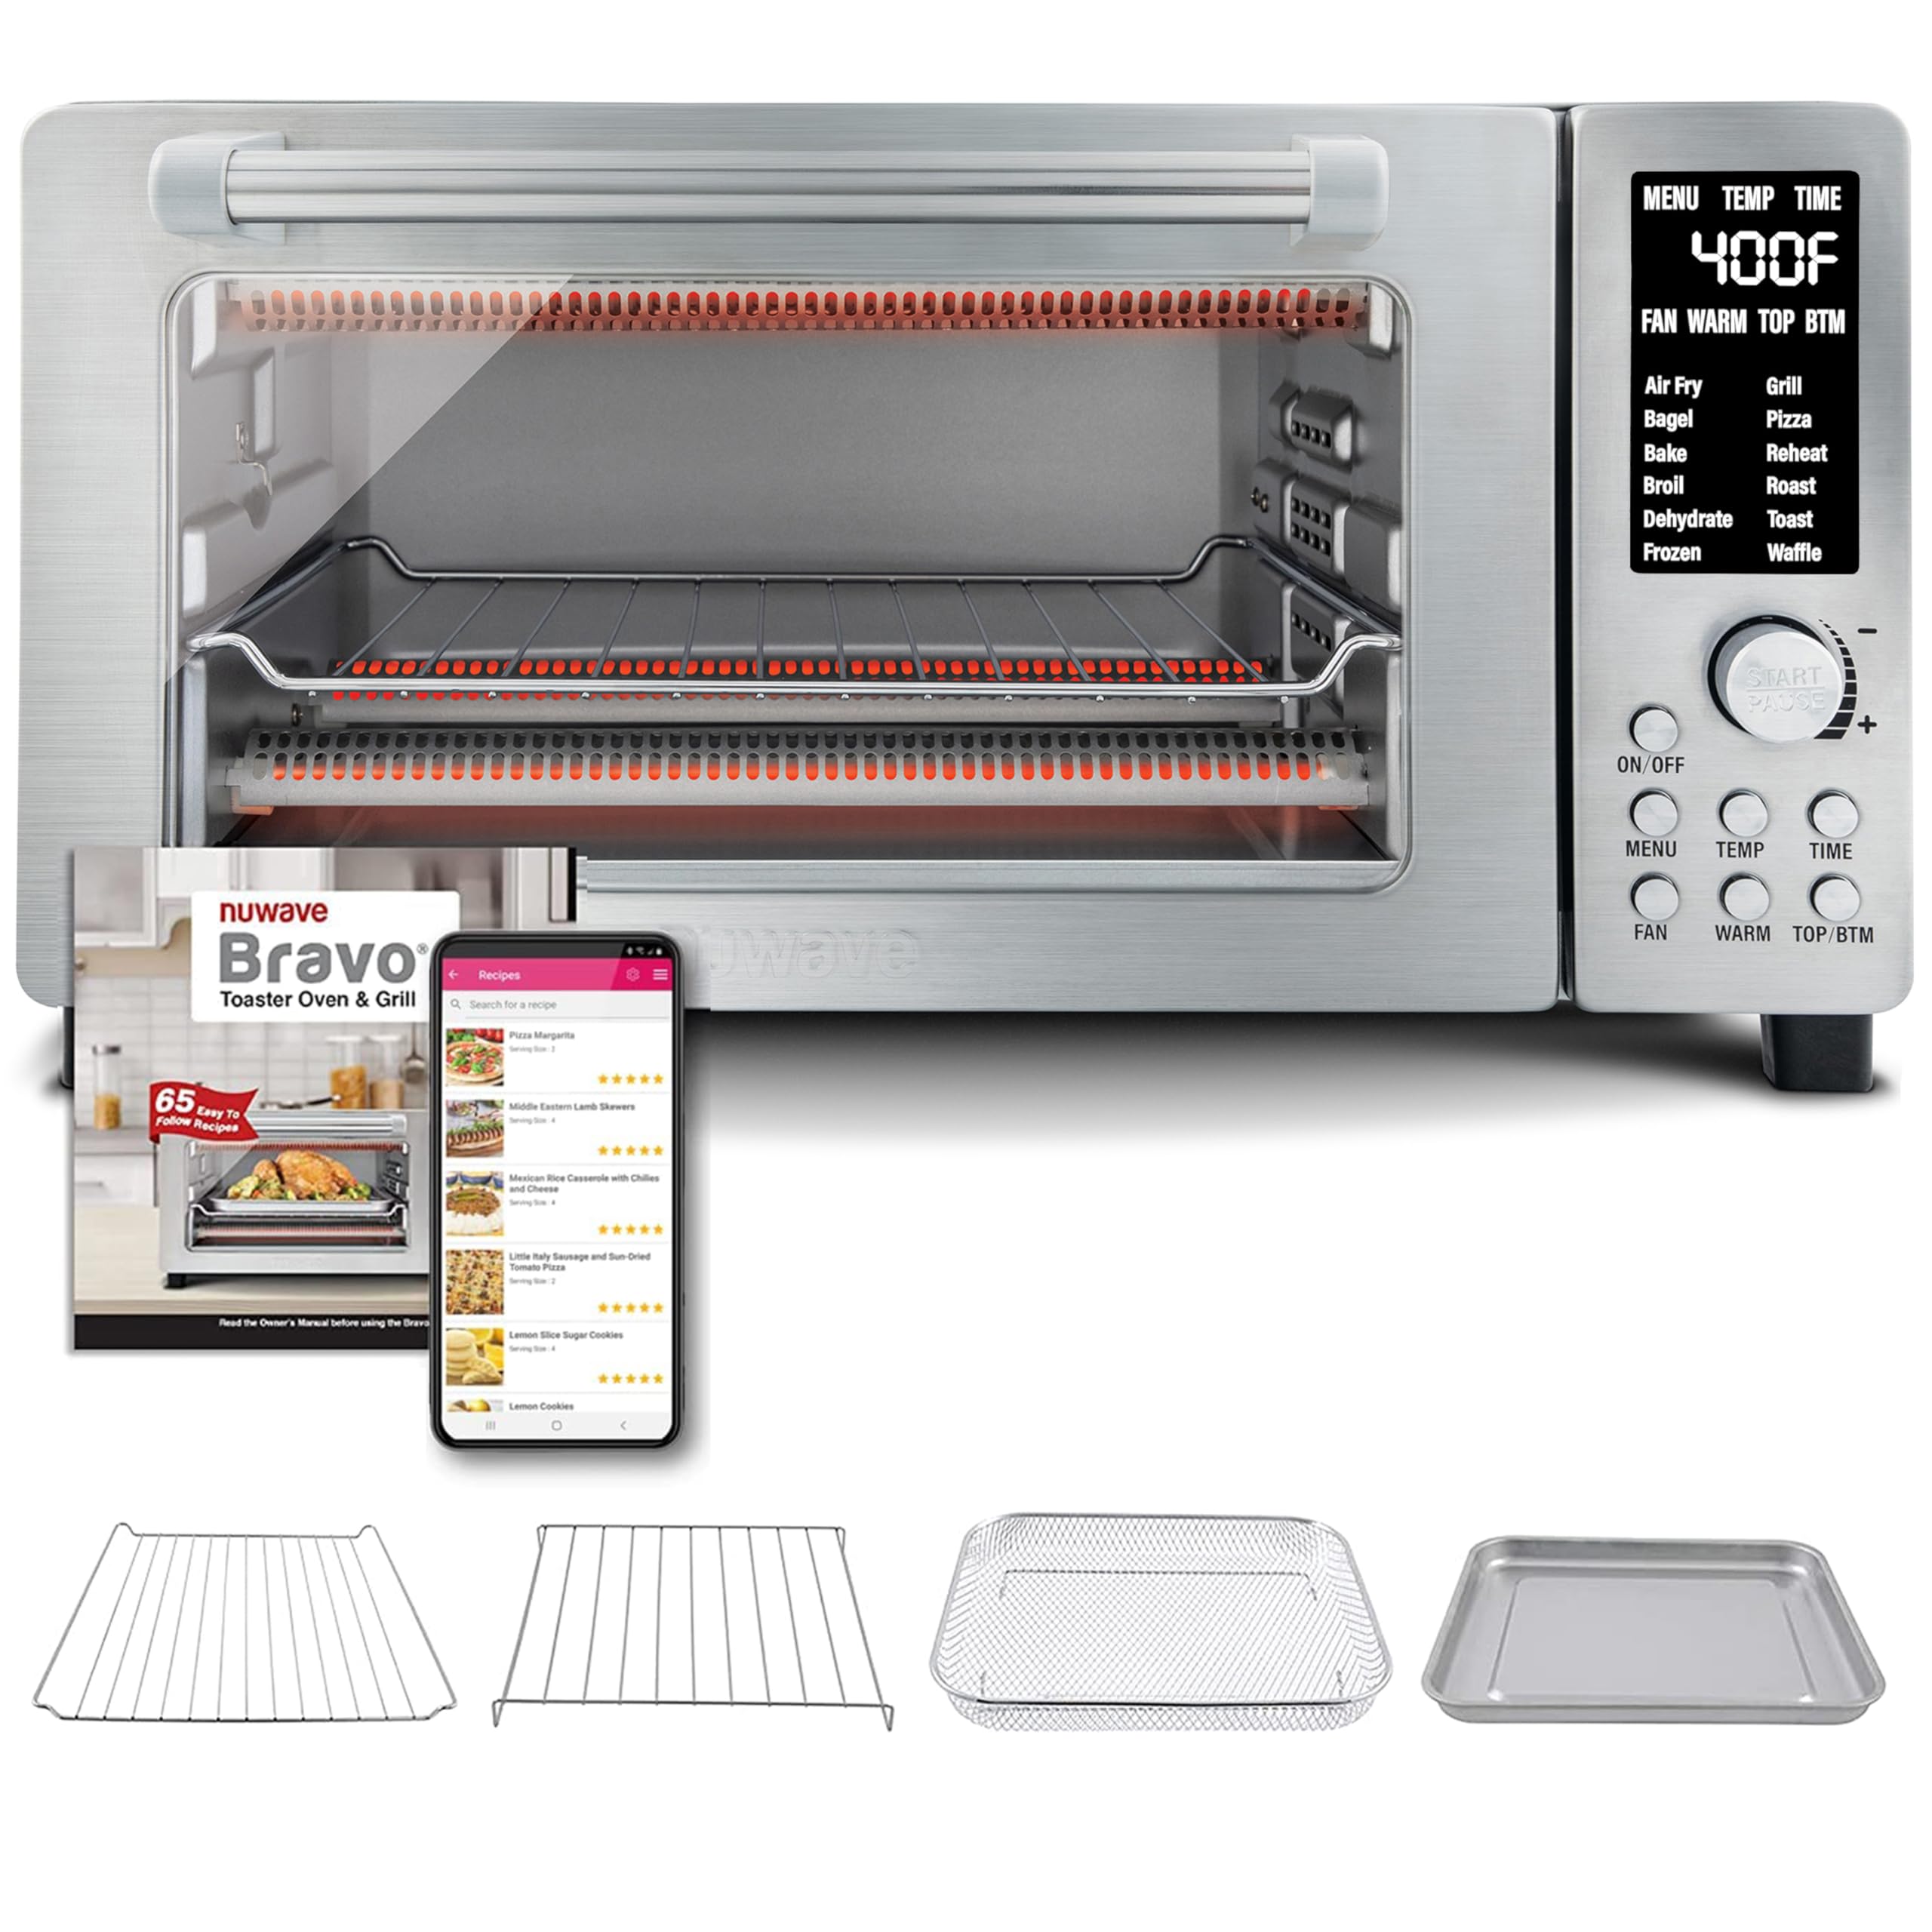 Nuwave Bravo Digital Toaster Oven